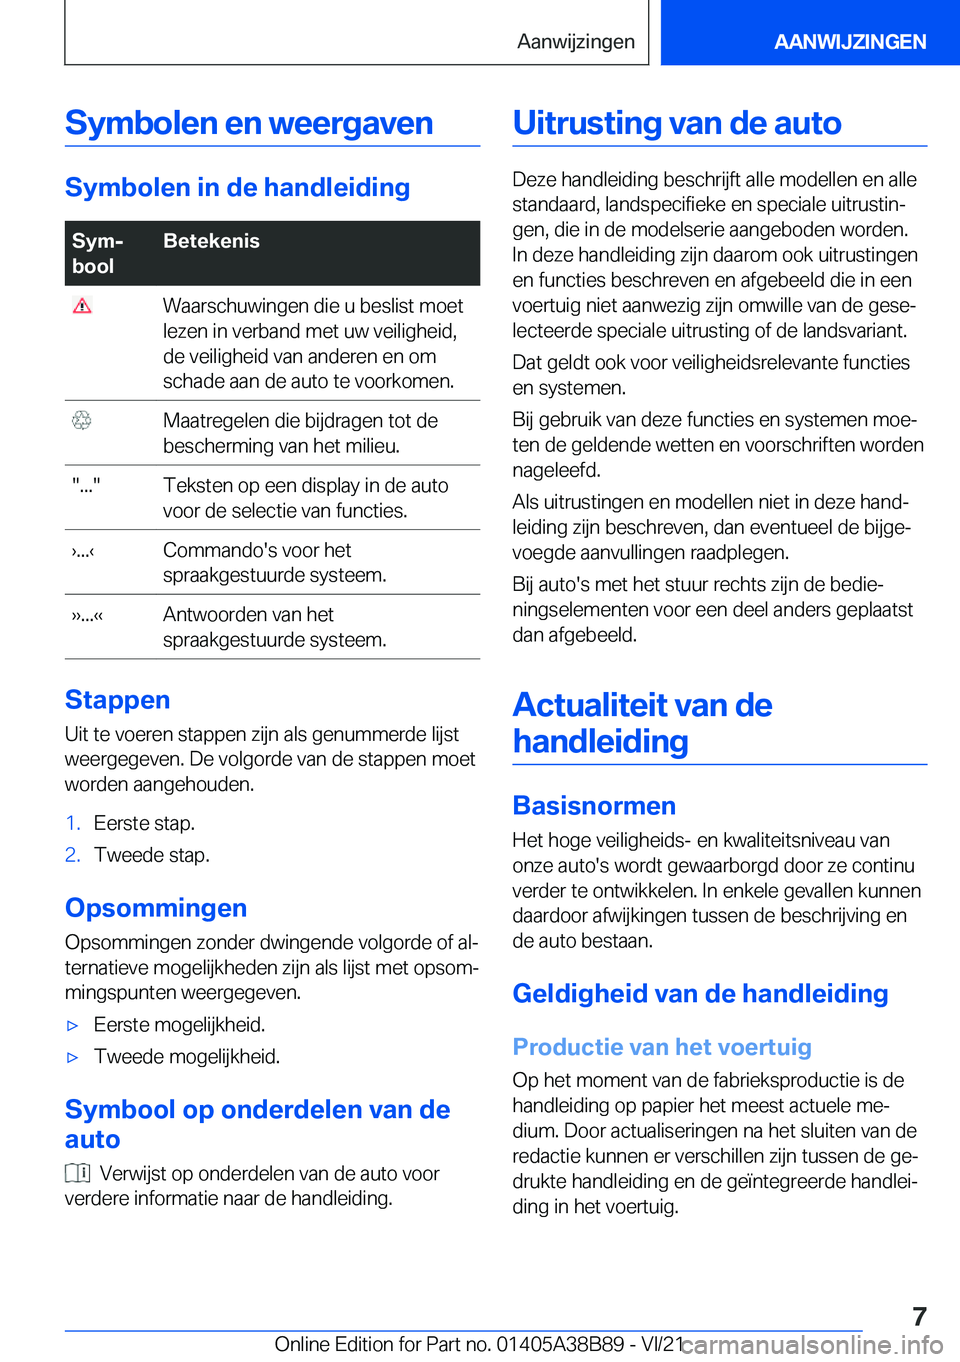 BMW M4 2022  Instructieboekjes (in Dutch) �S�y�m�b�o�l�e�n��e�n��w�e�e�r�g�a�v�e�n
�S�y�m�b�o�l�e�n��i�n��d�e��h�a�n�d�l�e�i�d�i�n�g
�S�y�mj
�b�o�o�l�B�e�t�e�k�e�n�i�s��W�a�a�r�s�c�h�u�w�i�n�g�e�n��d�i�e��u��b�e�s�l�i�s�t��m�o�e�t
